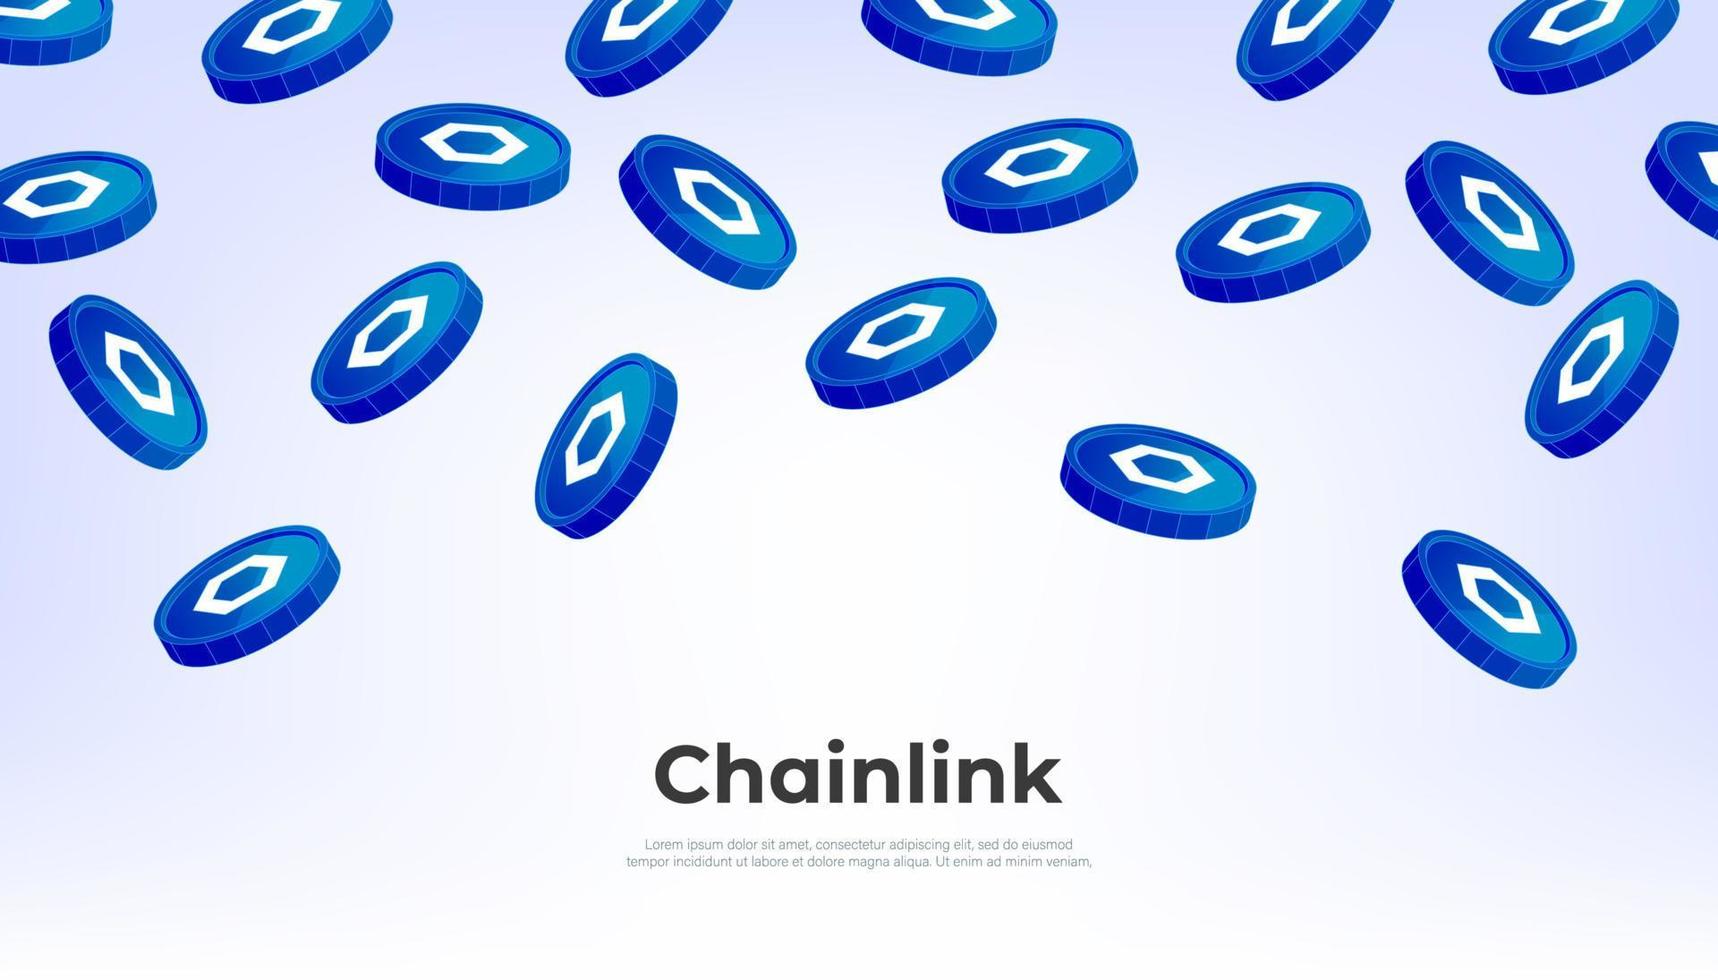 moeda chainlink caindo do céu. link fundo de banner de conceito de criptomoeda. vetor